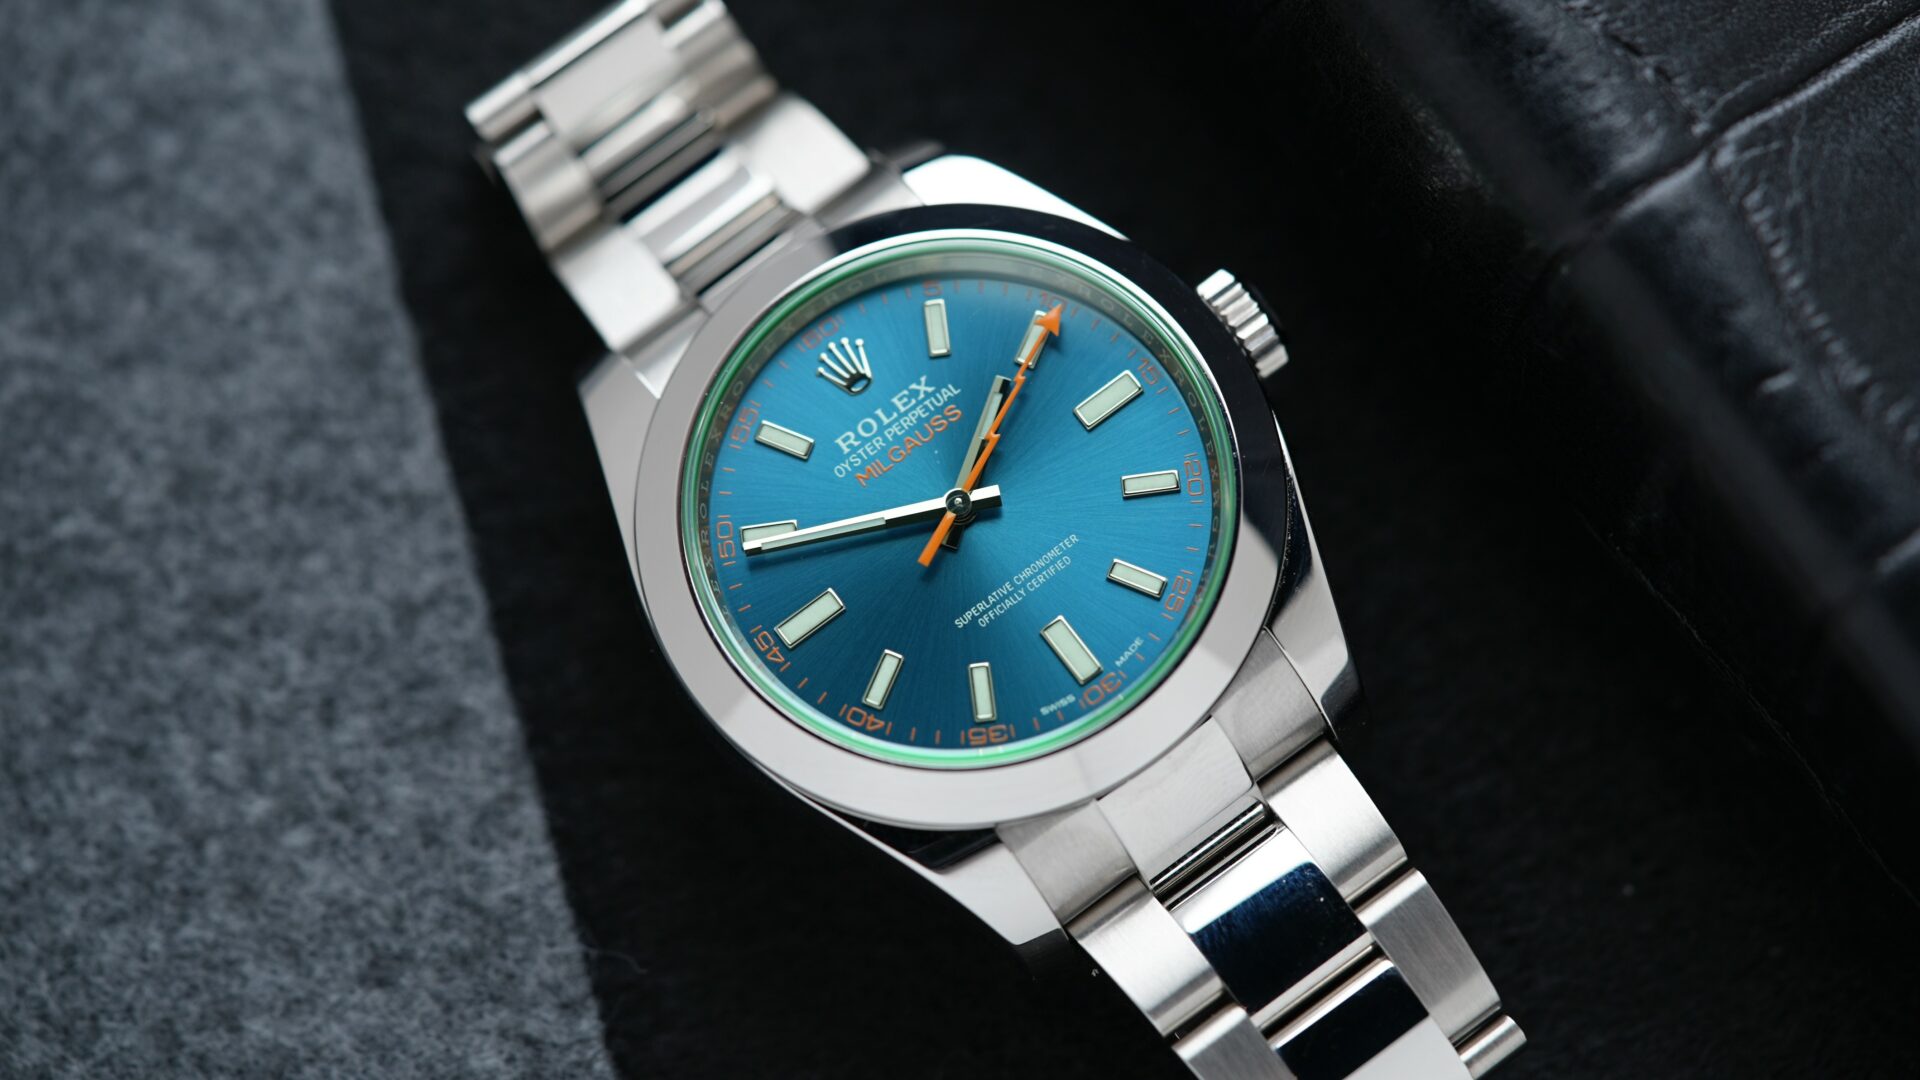 Rolex Milgauss Z Blue UNWORN 116400GV wristwatch on display on an angle under white light.